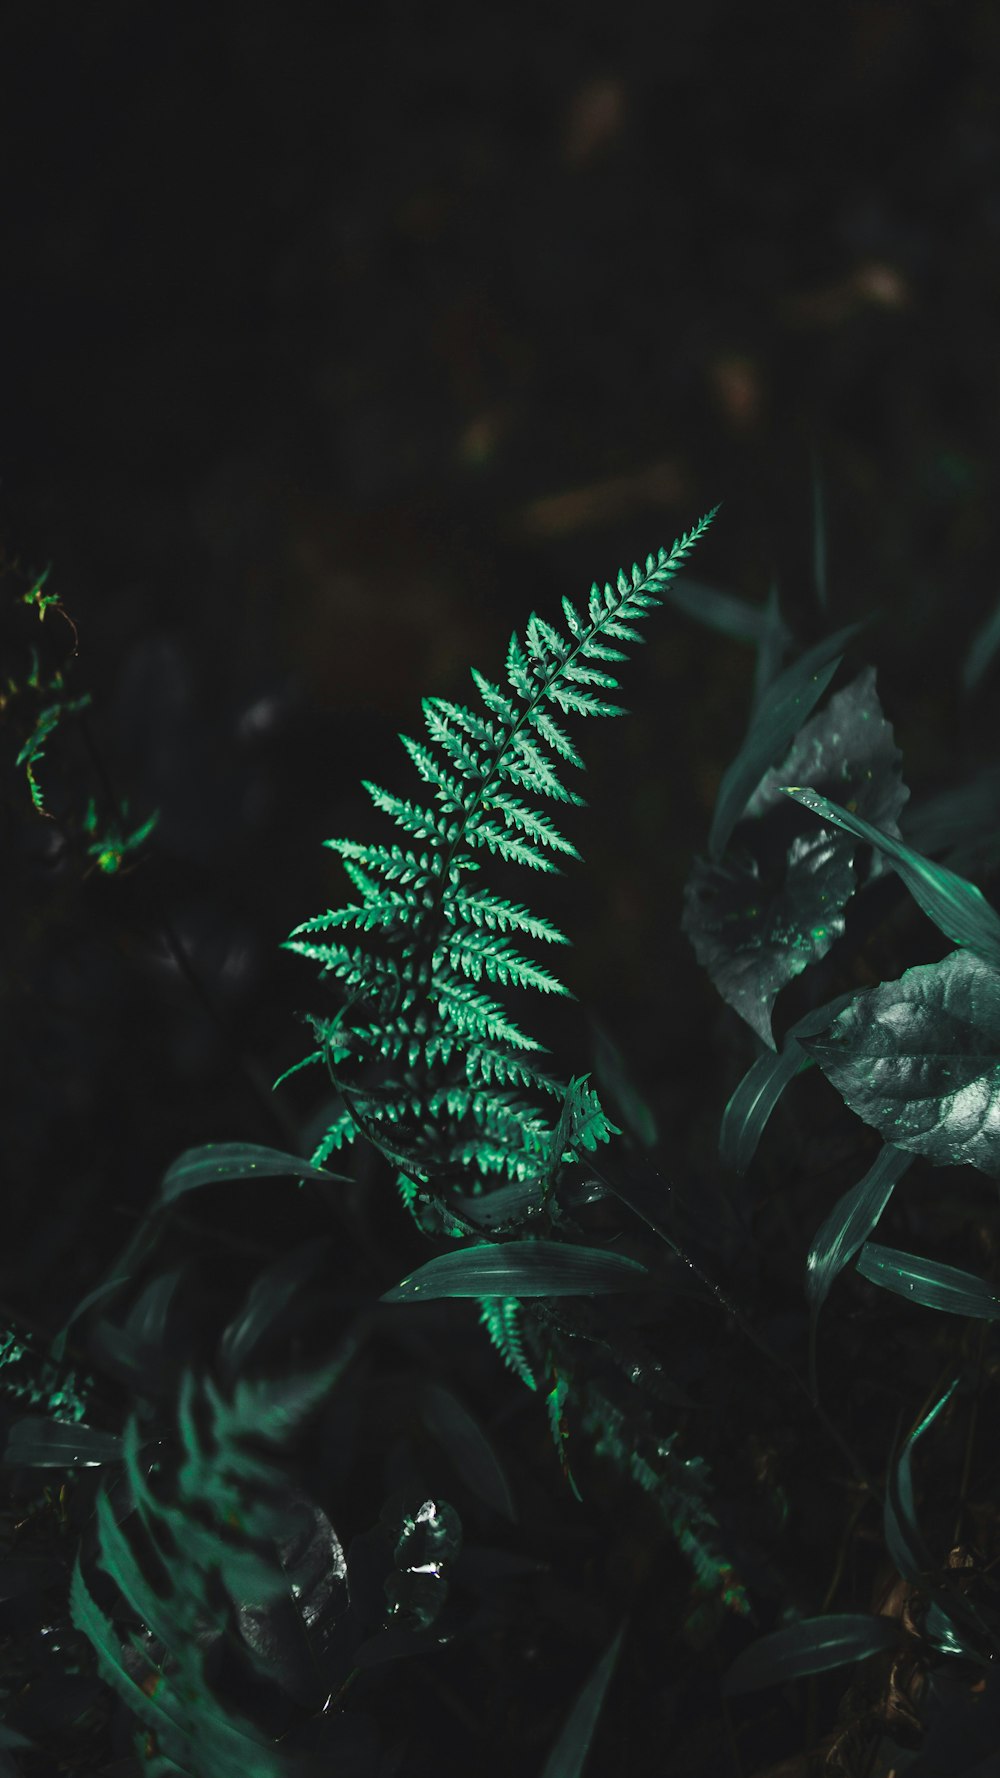 green fern leaves in forest